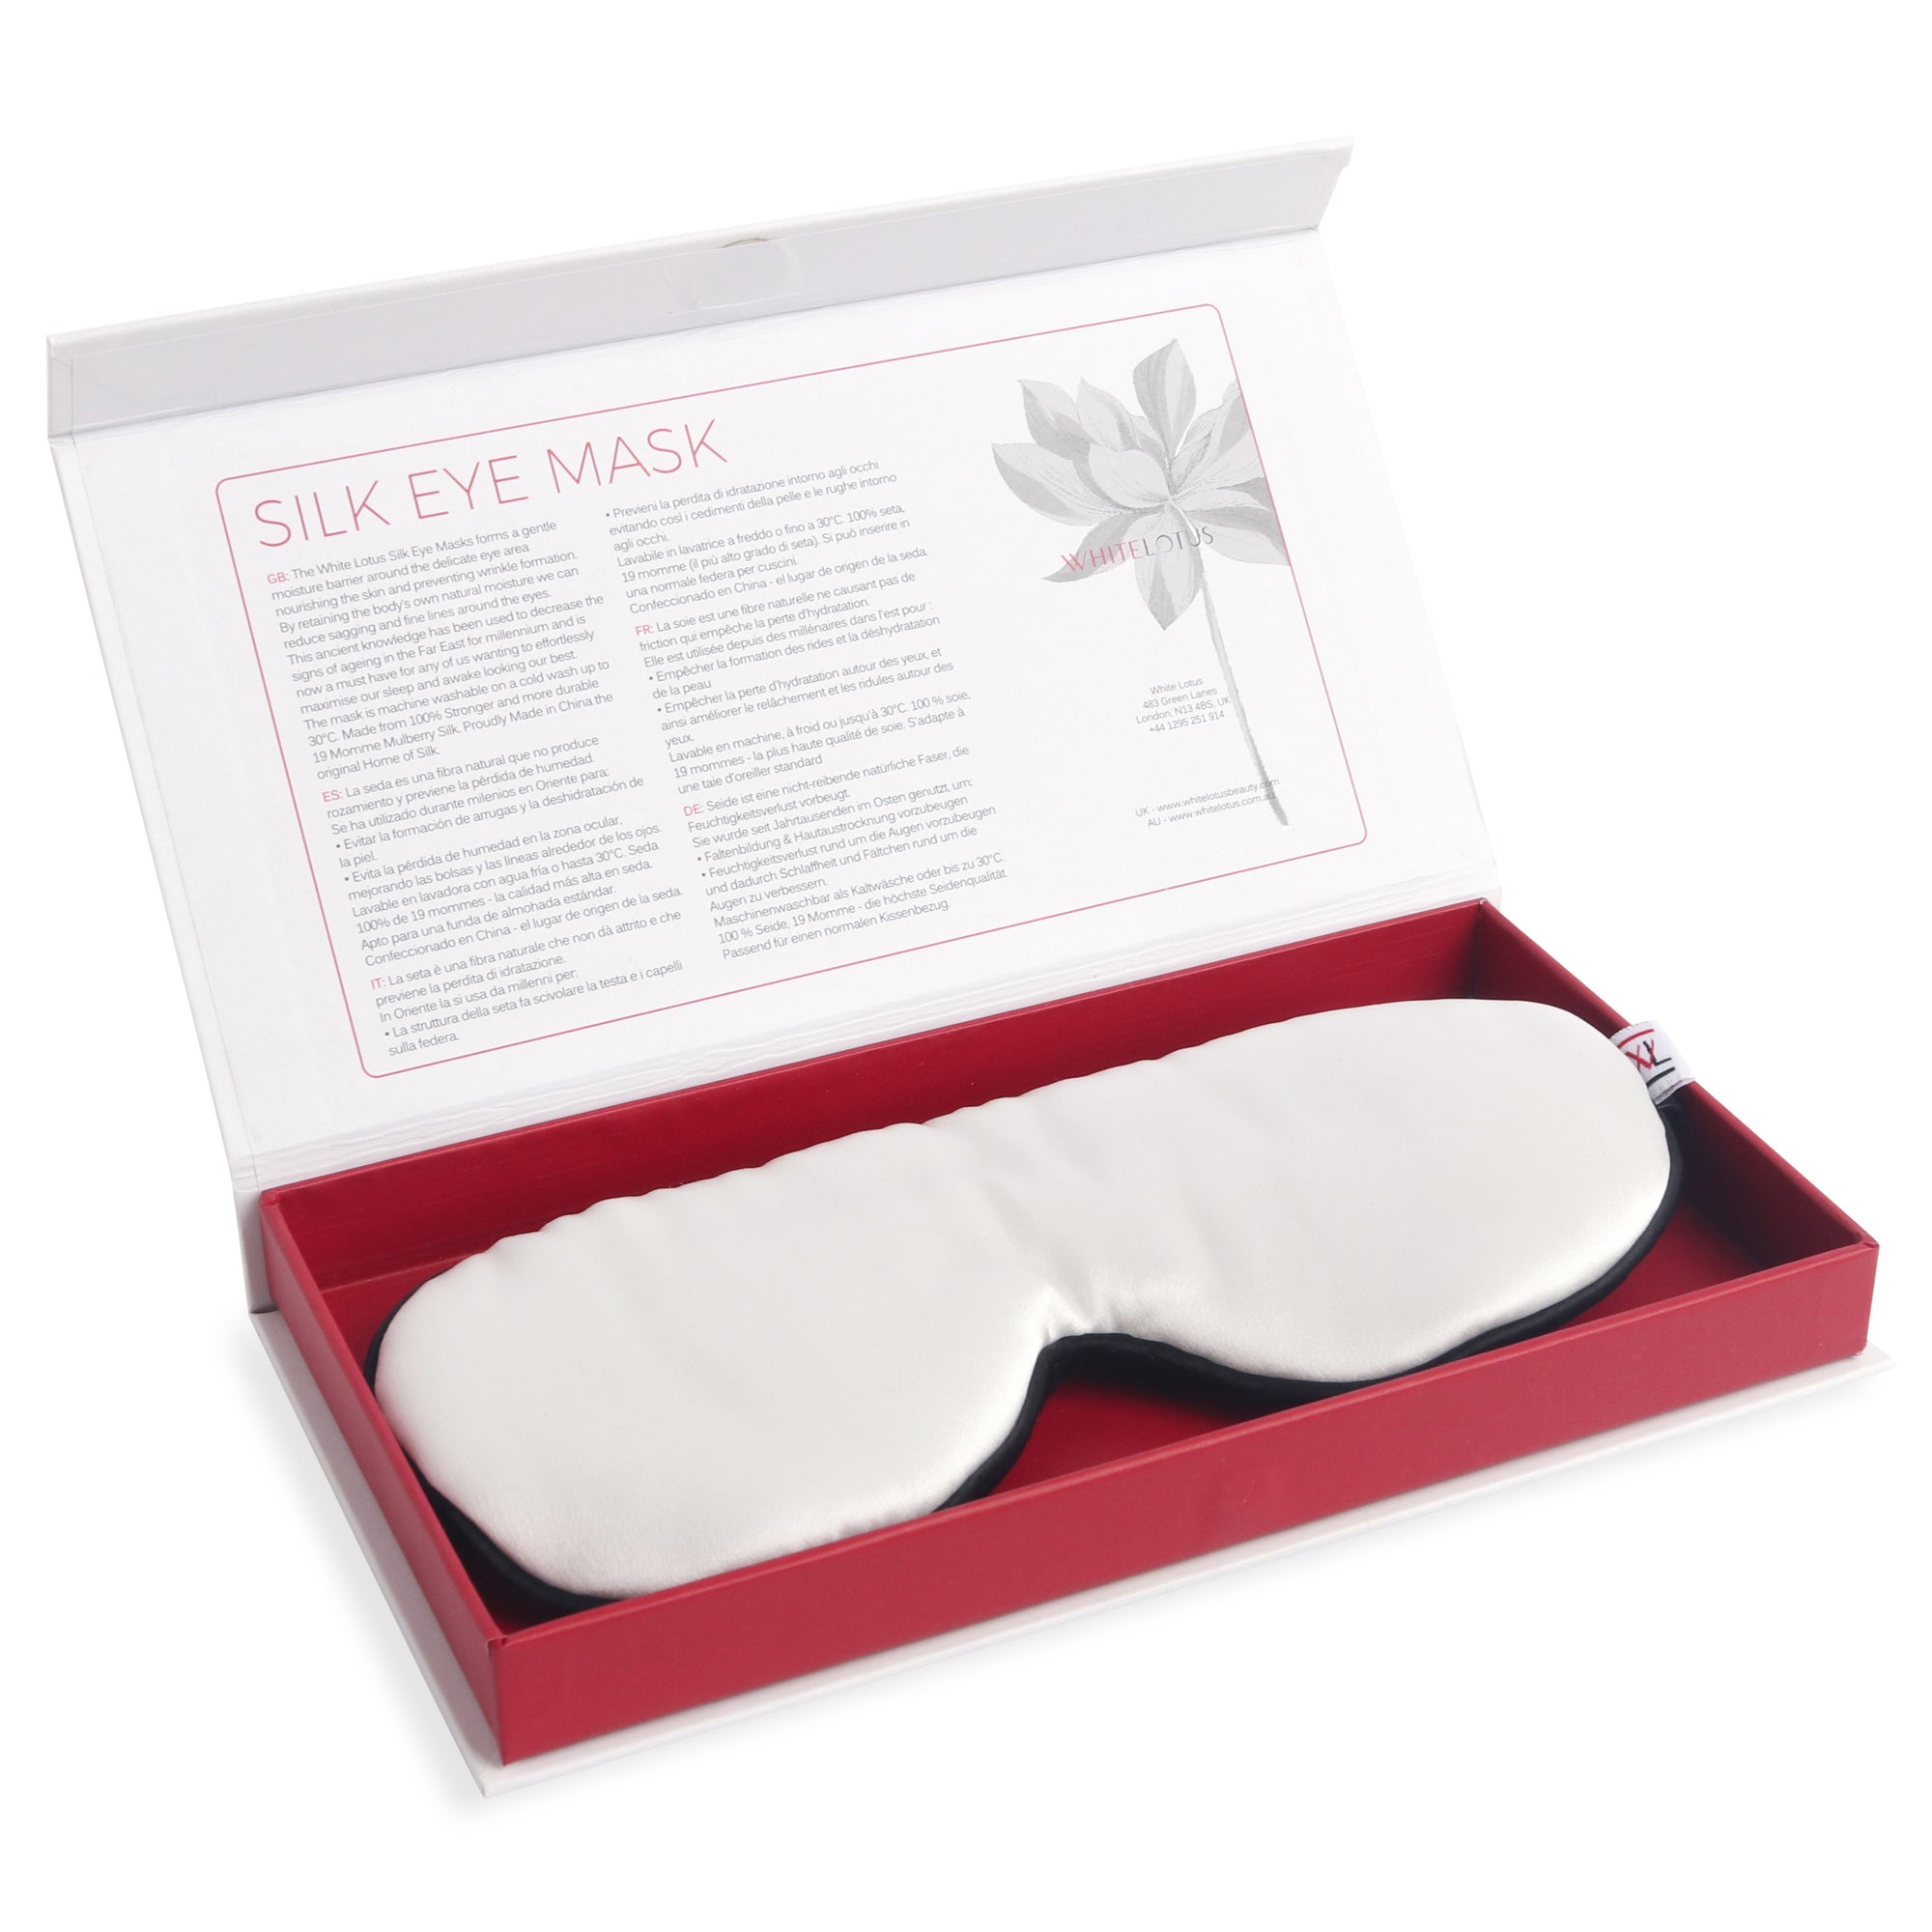 100% Pure Silk Eye Mask - Reduce Wrinkles While you sleep -